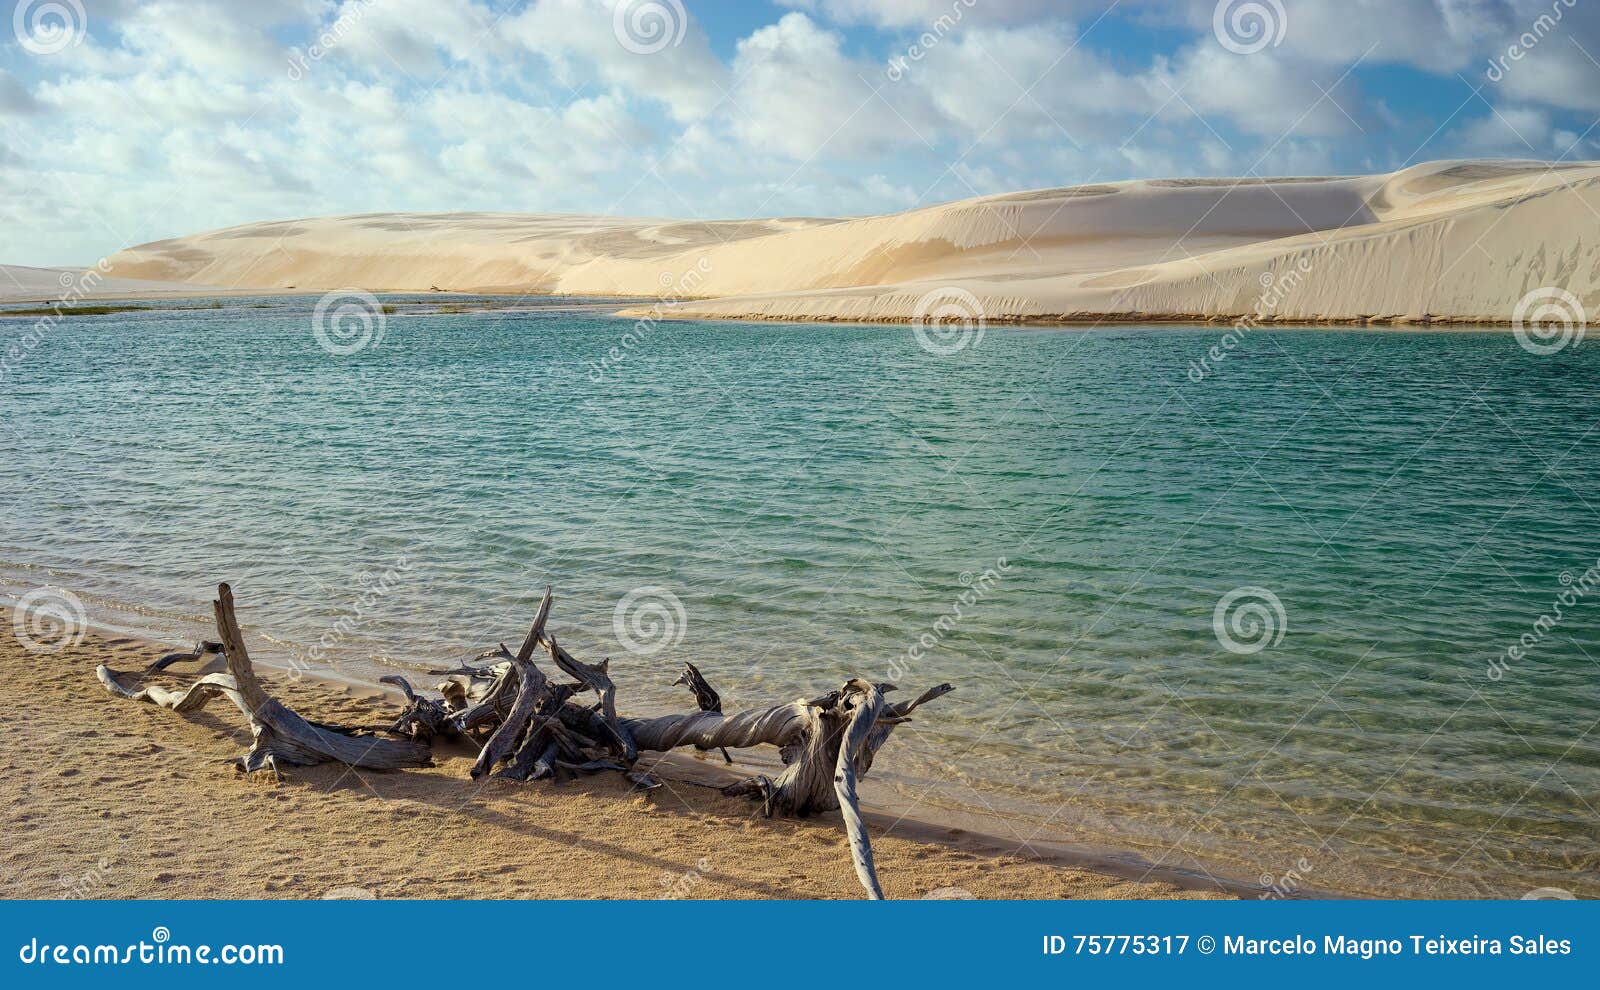 lagoon and dunes at grandes lencois, lencois maranhenses national park, maranhao, brazil